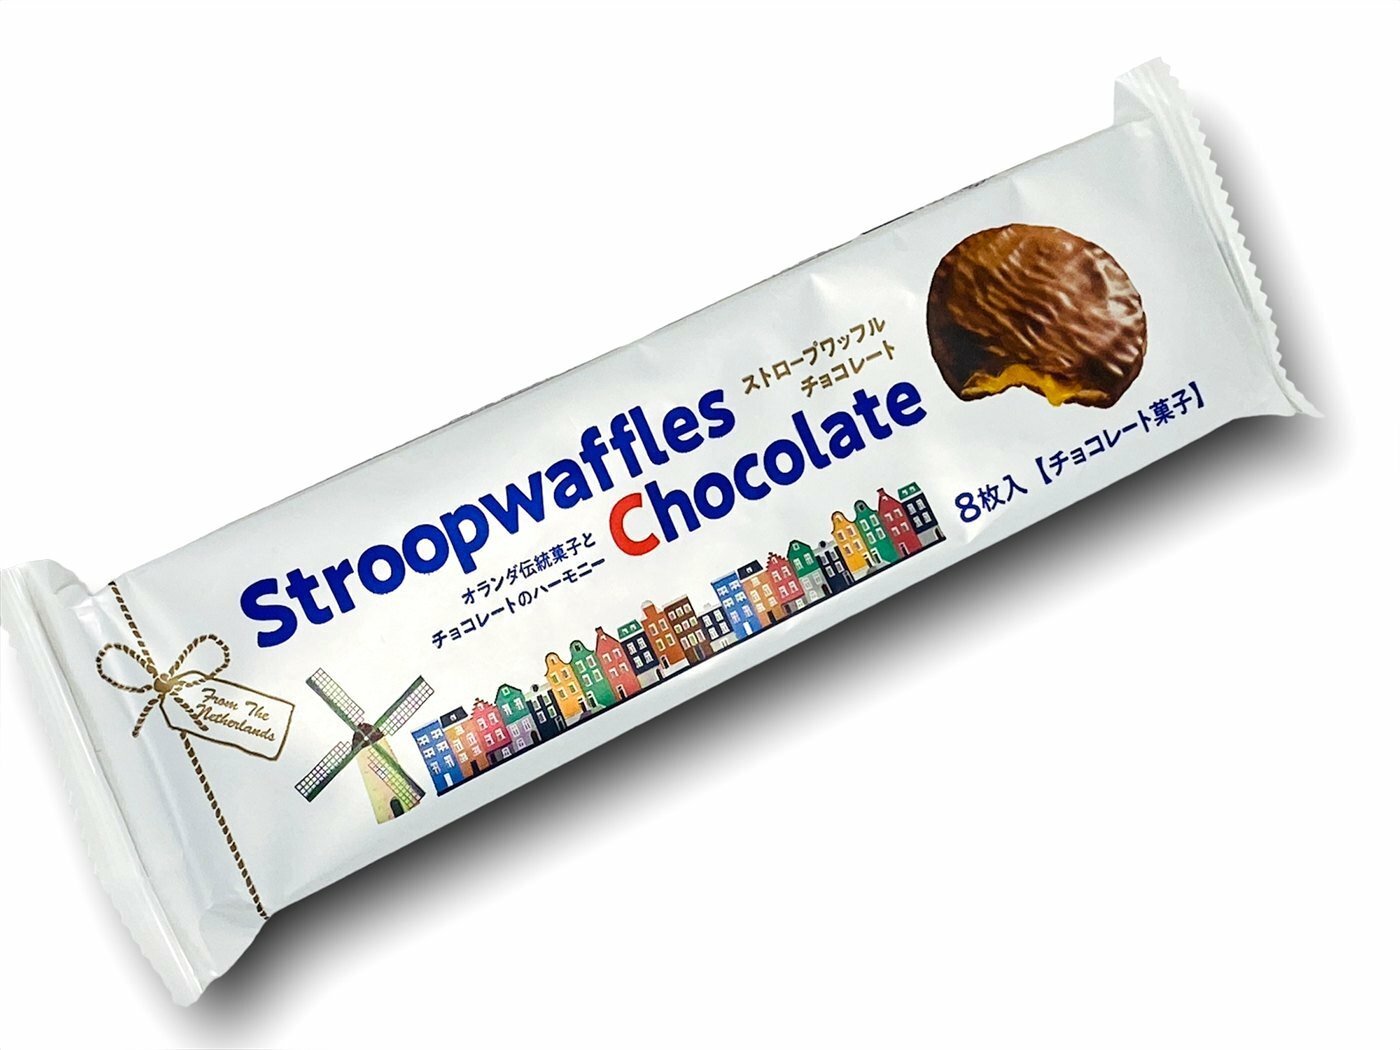 Stroopwaffles Chocolate